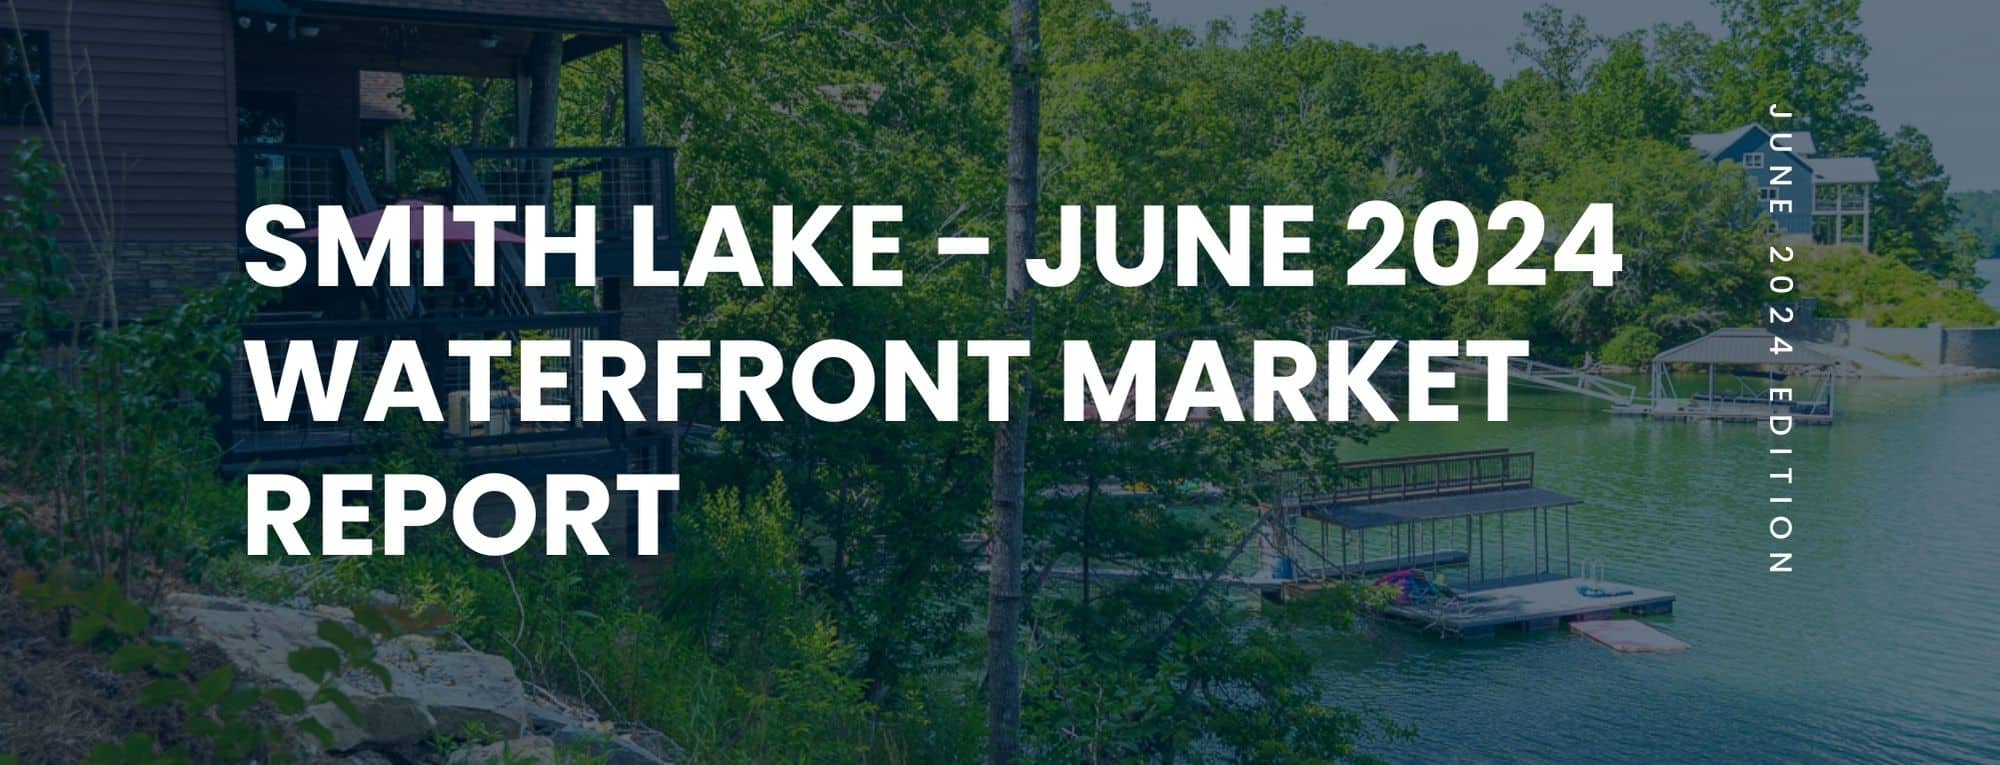 Smith Lake Waterfront Market Report June 2024